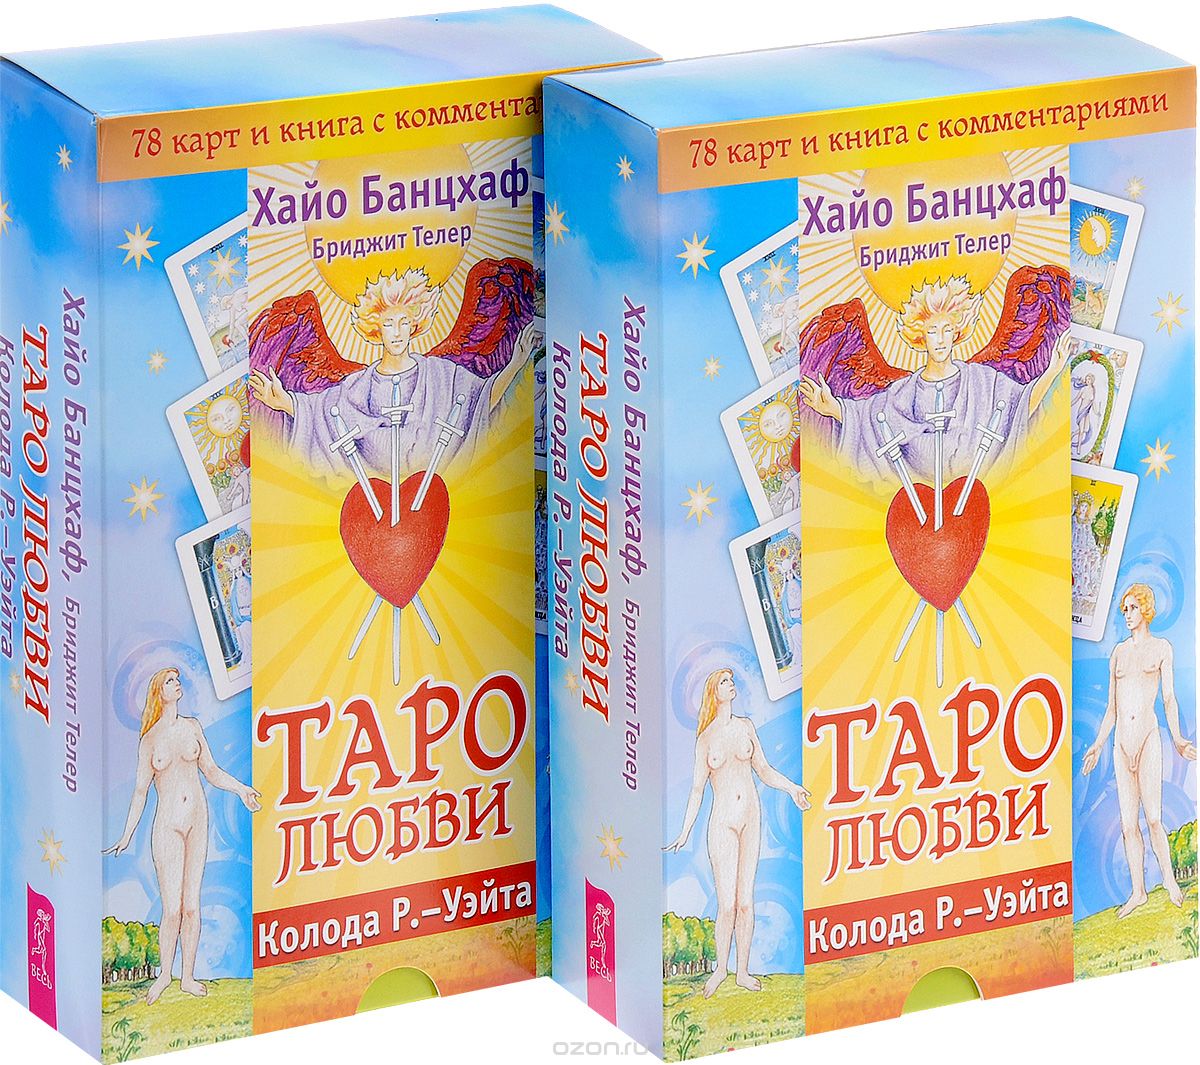 Скачать книгу "Таро любви (комплект из 2 книг + 2 колоды карт), Хайо Банцхаф, Бриджит Телер"